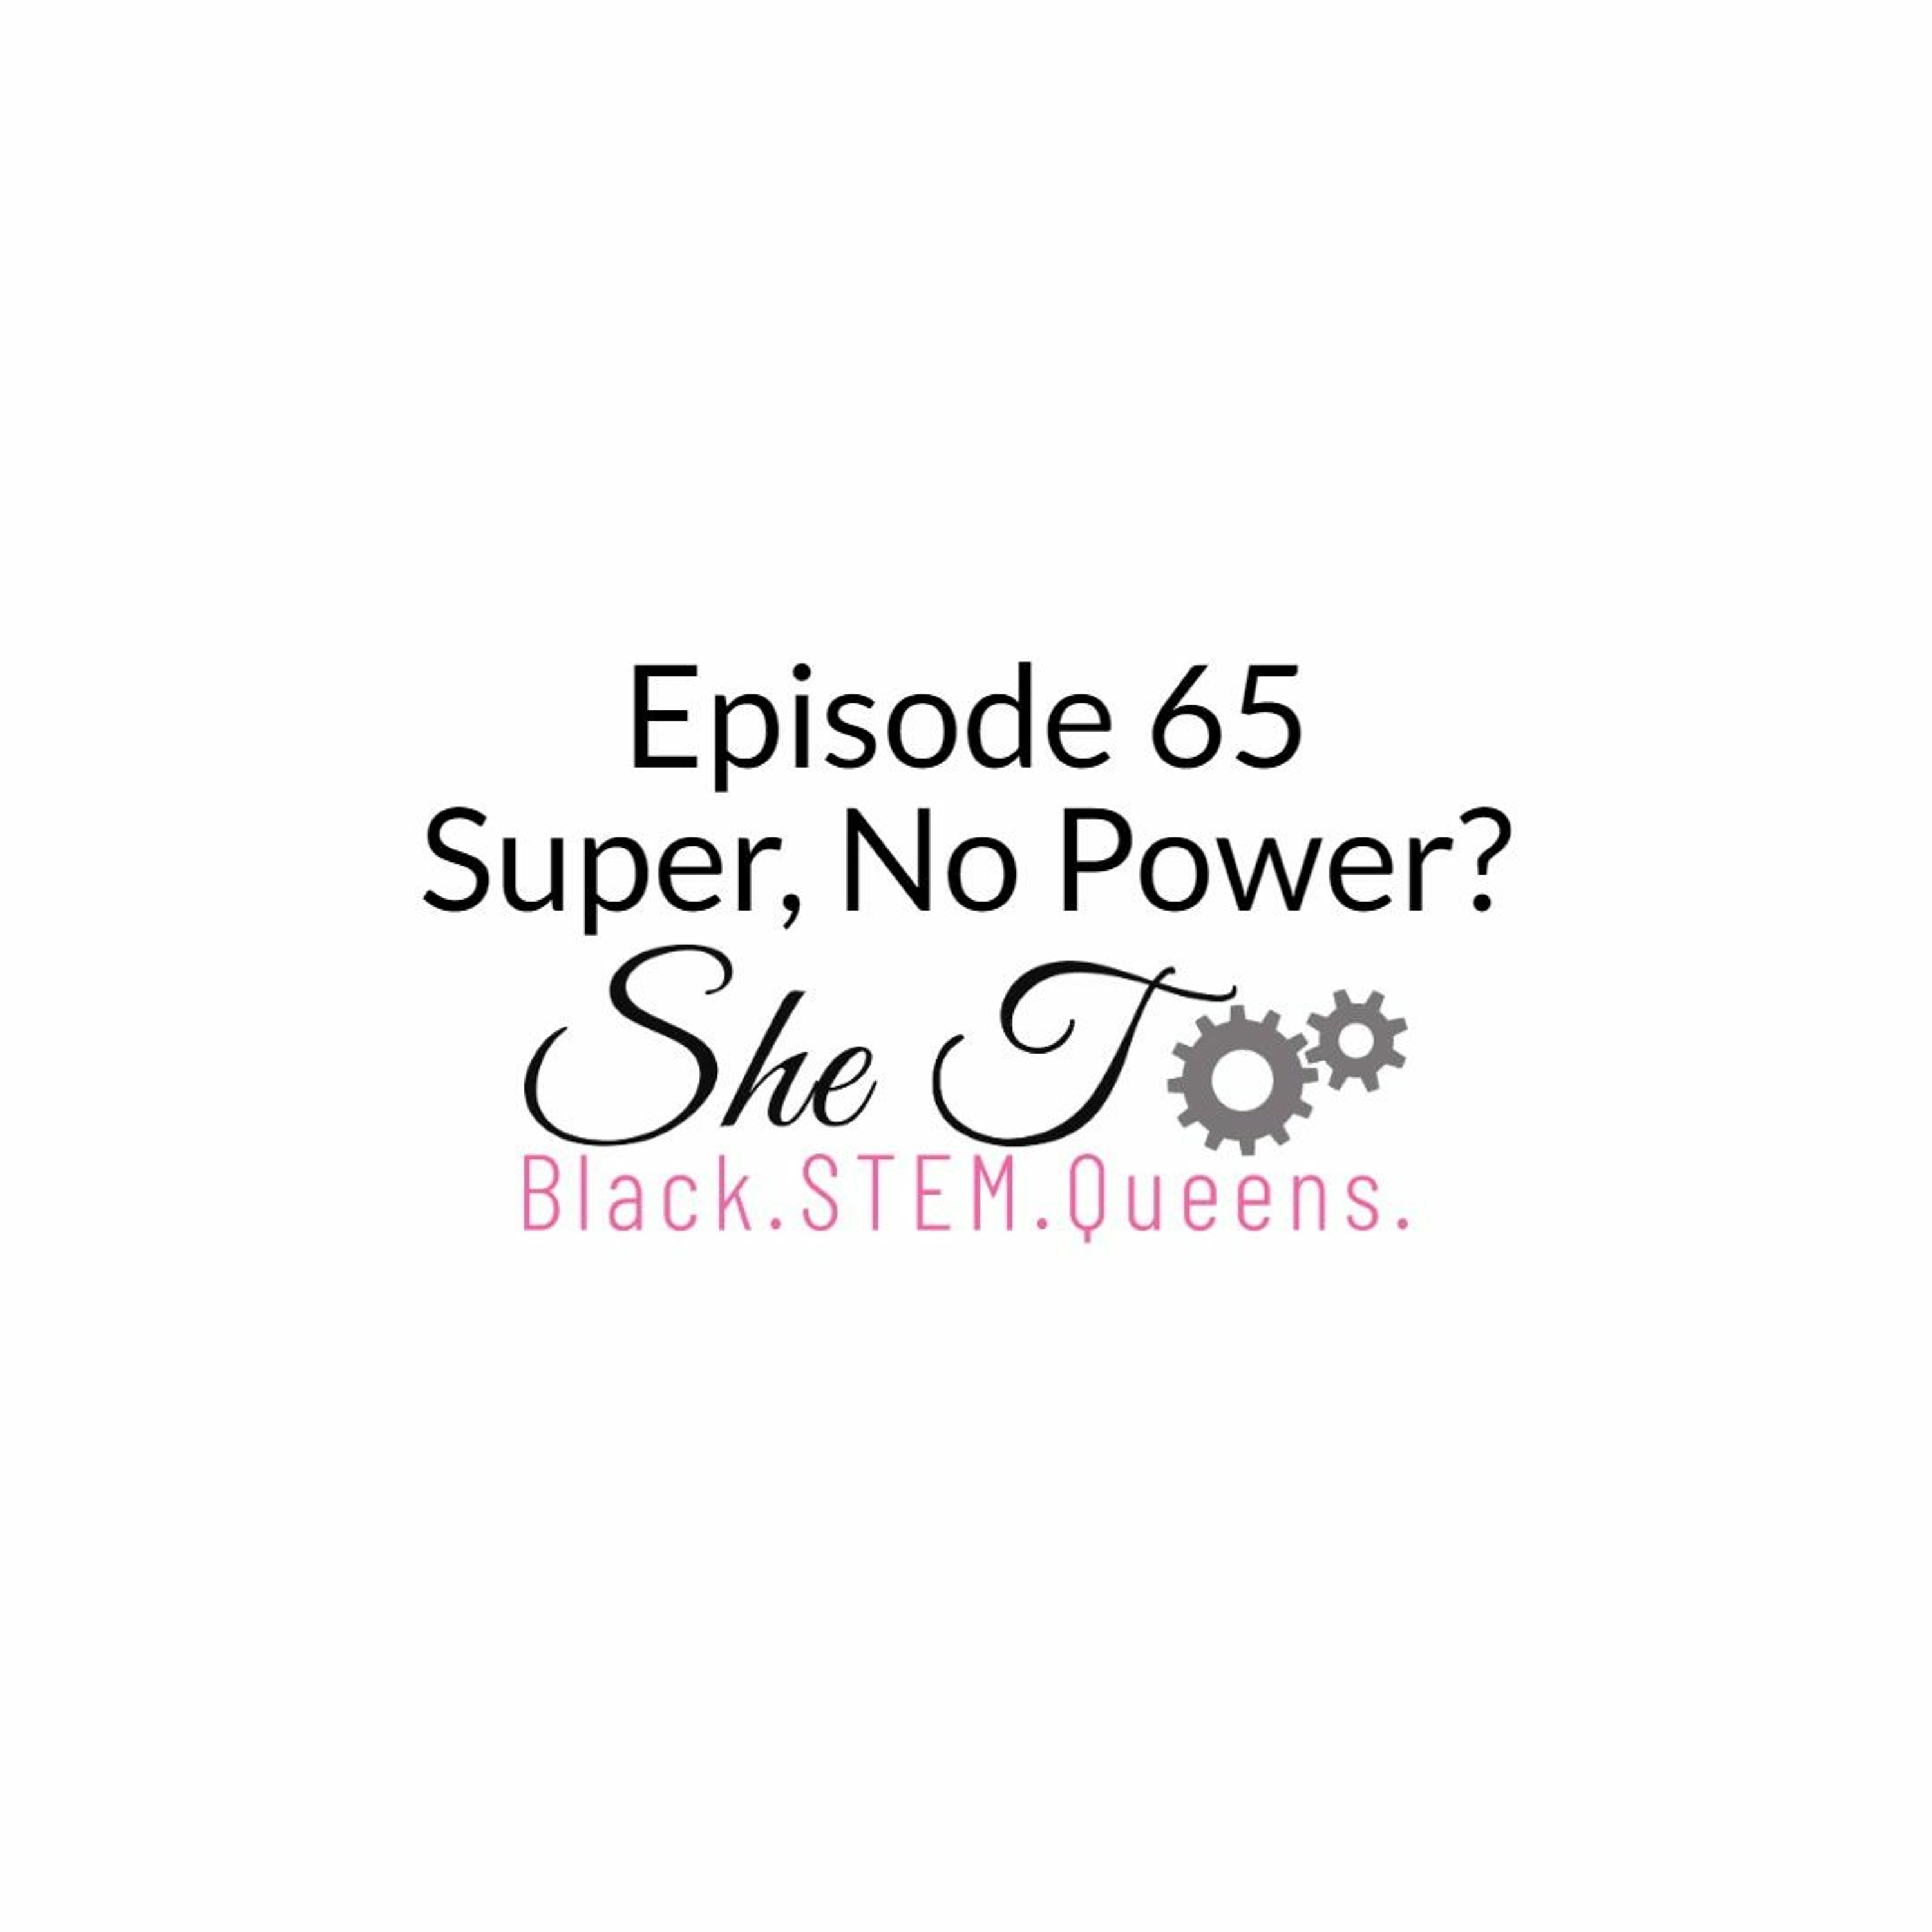 Episode 65: Super, No Power?